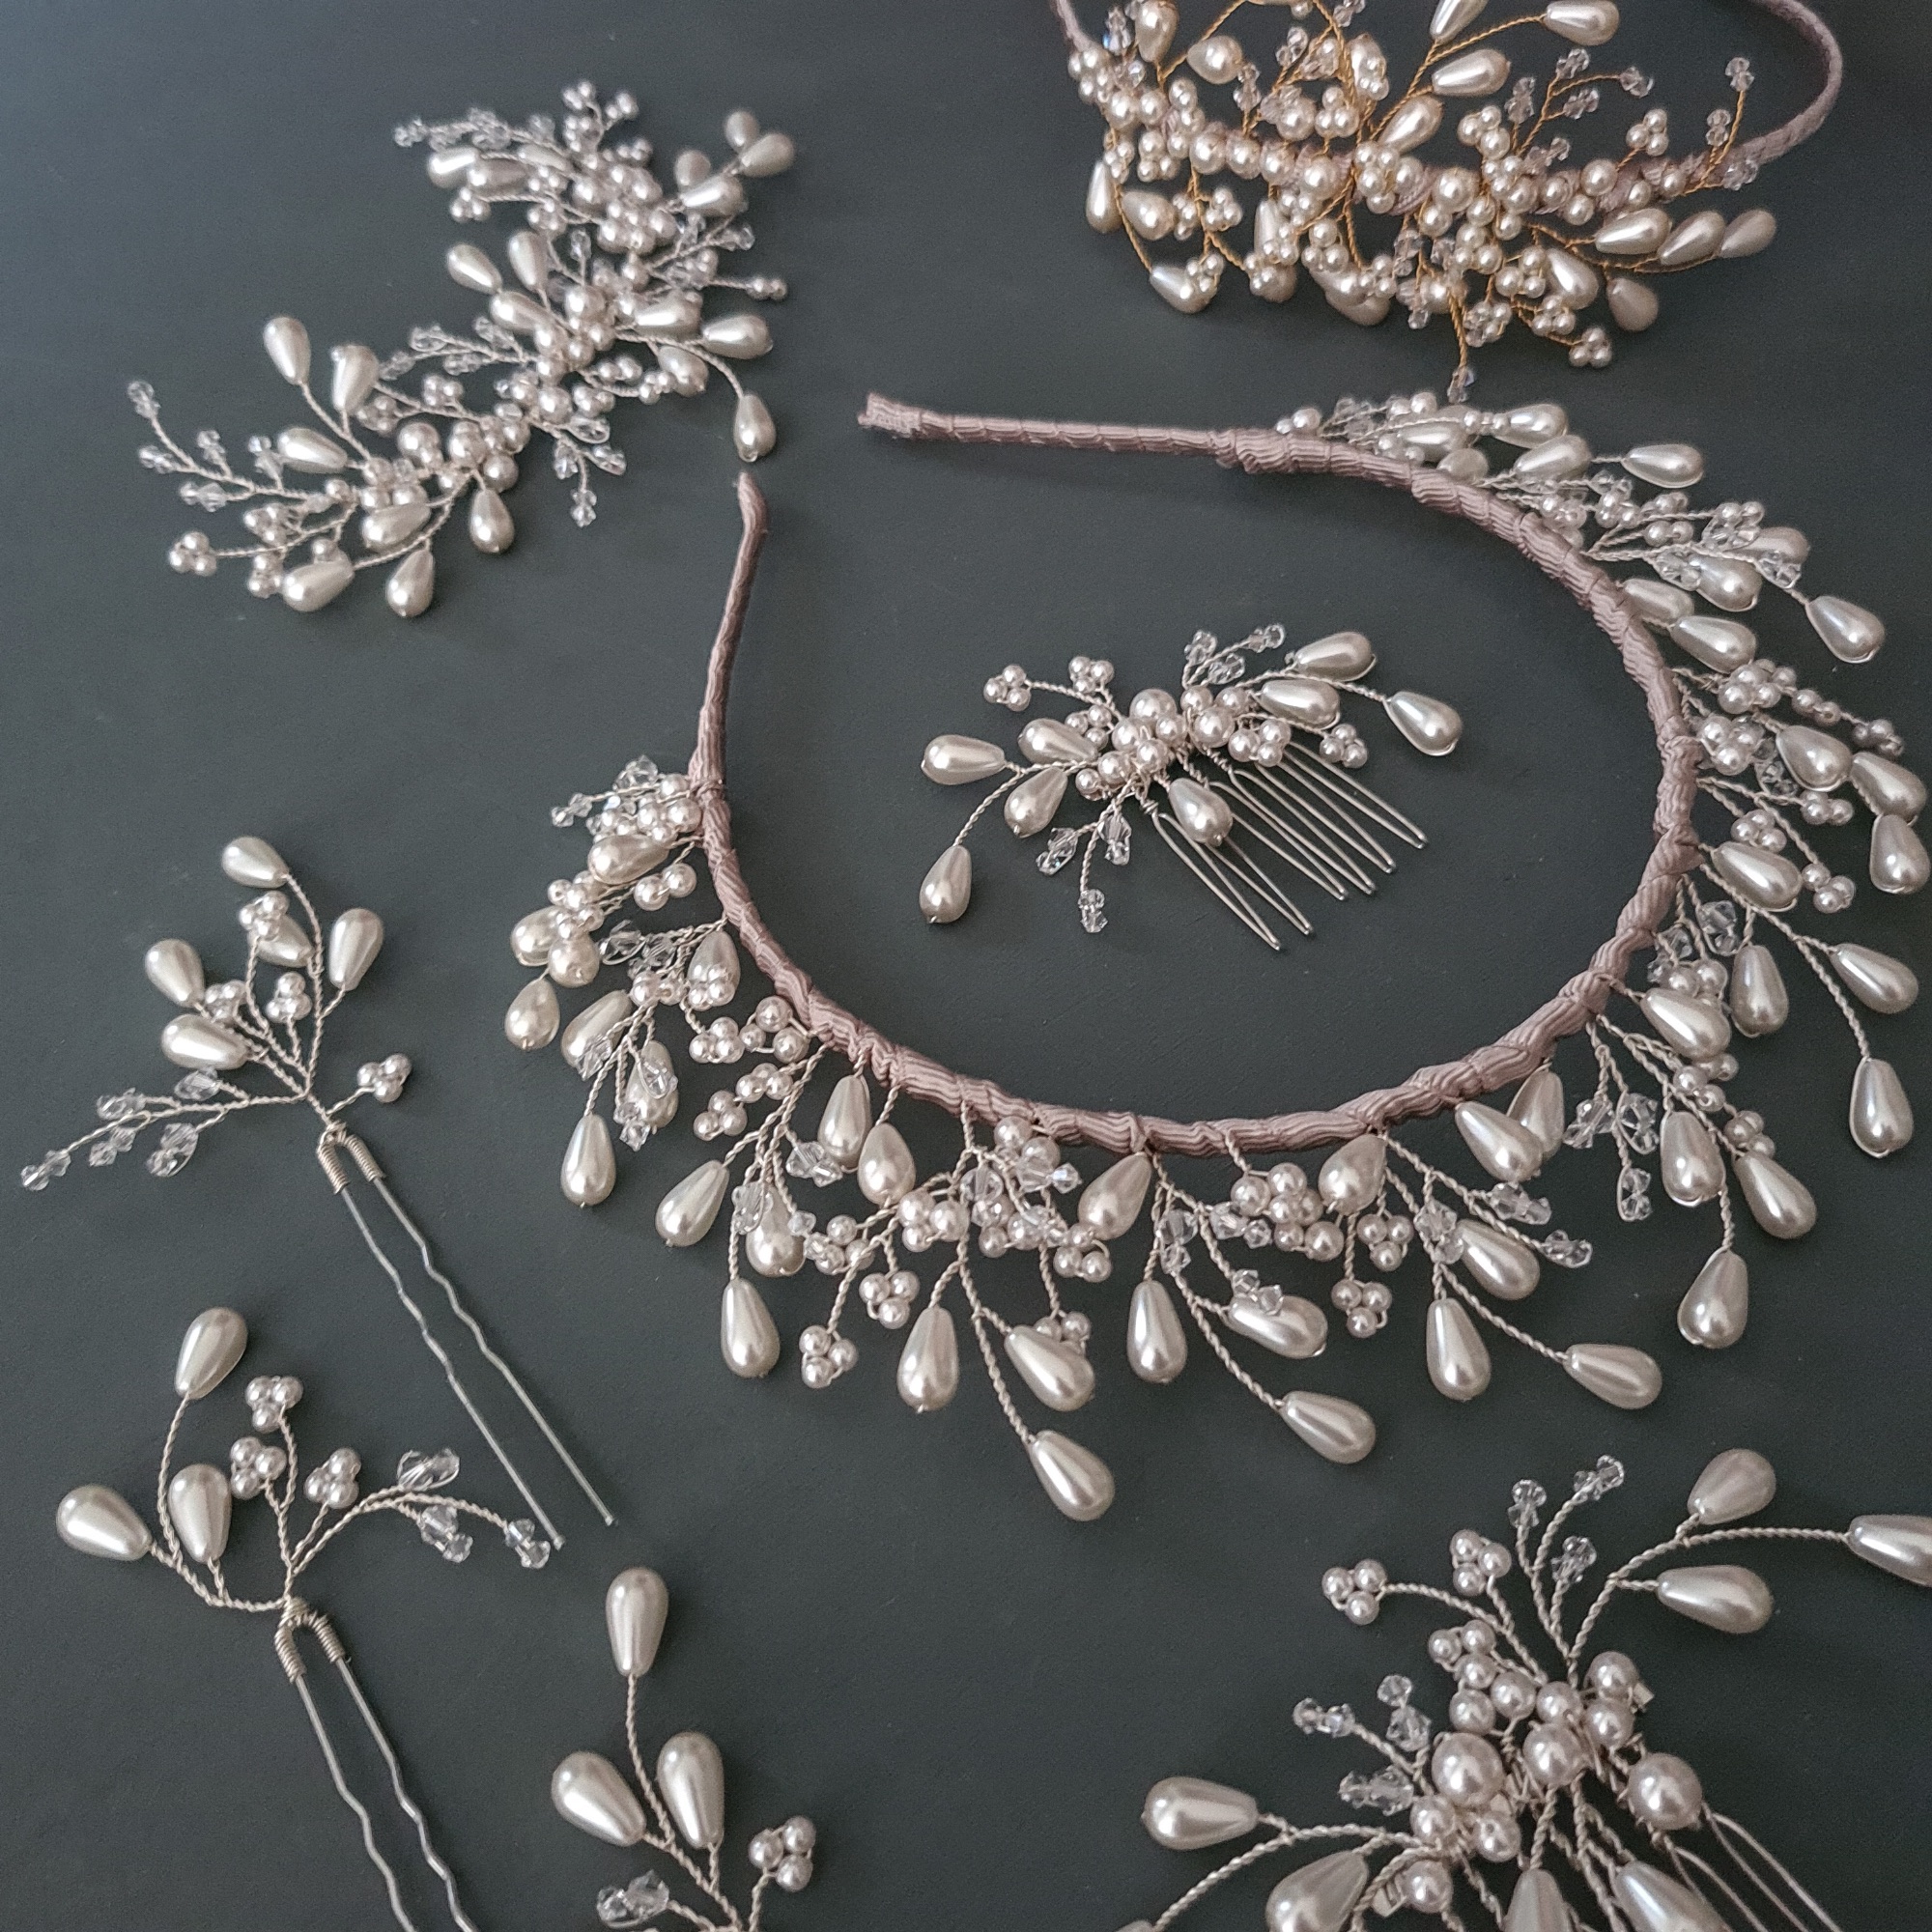 Luna vegan pearl bridal hair accessories handmade by Clare Lloyd